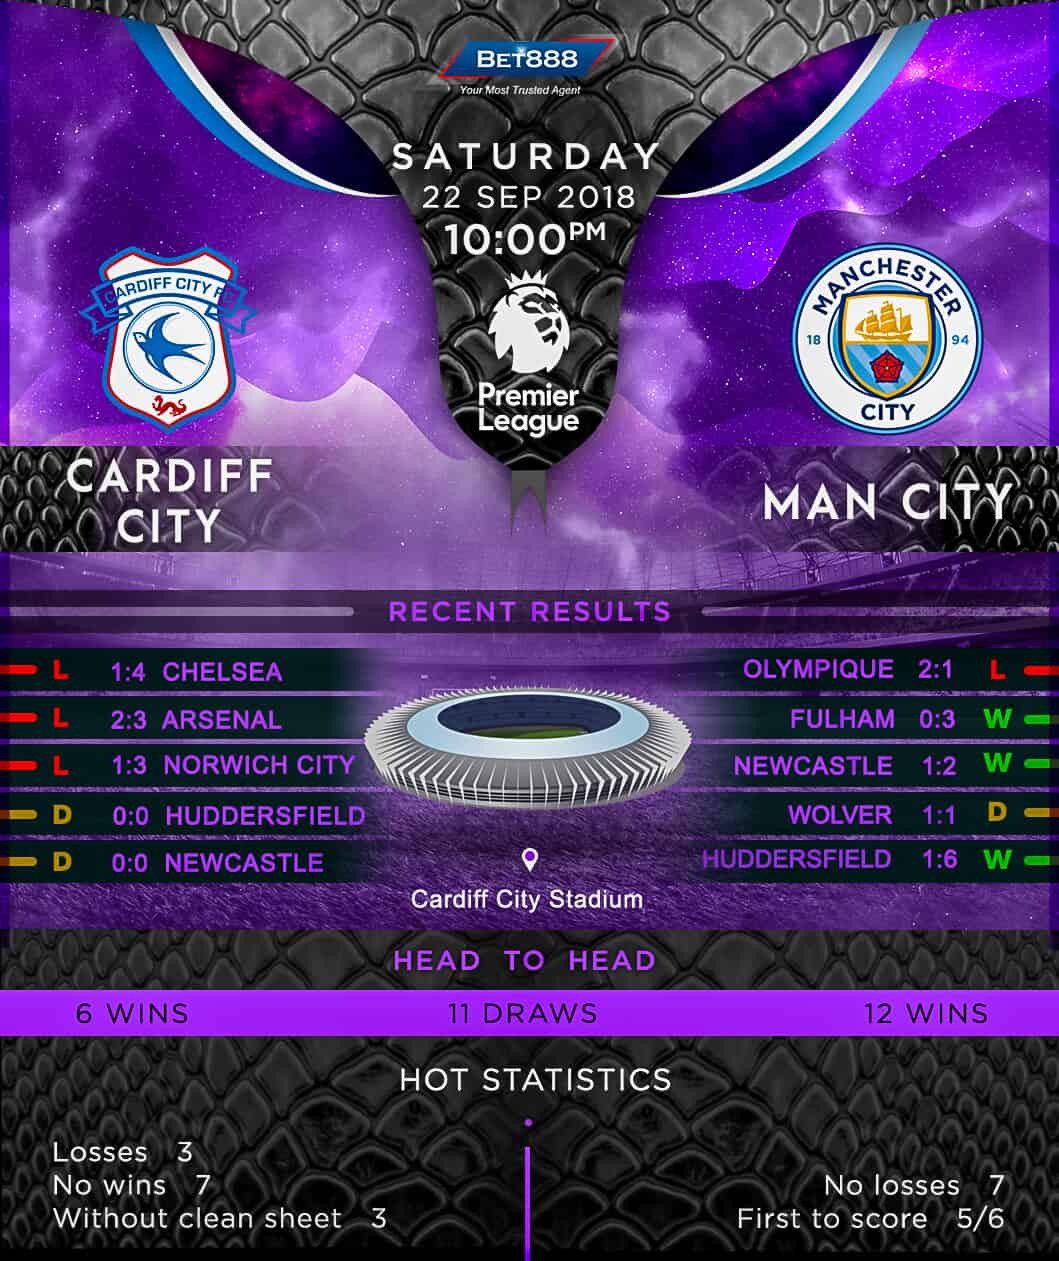 Cardiff City vs Manchester City 22/09/18